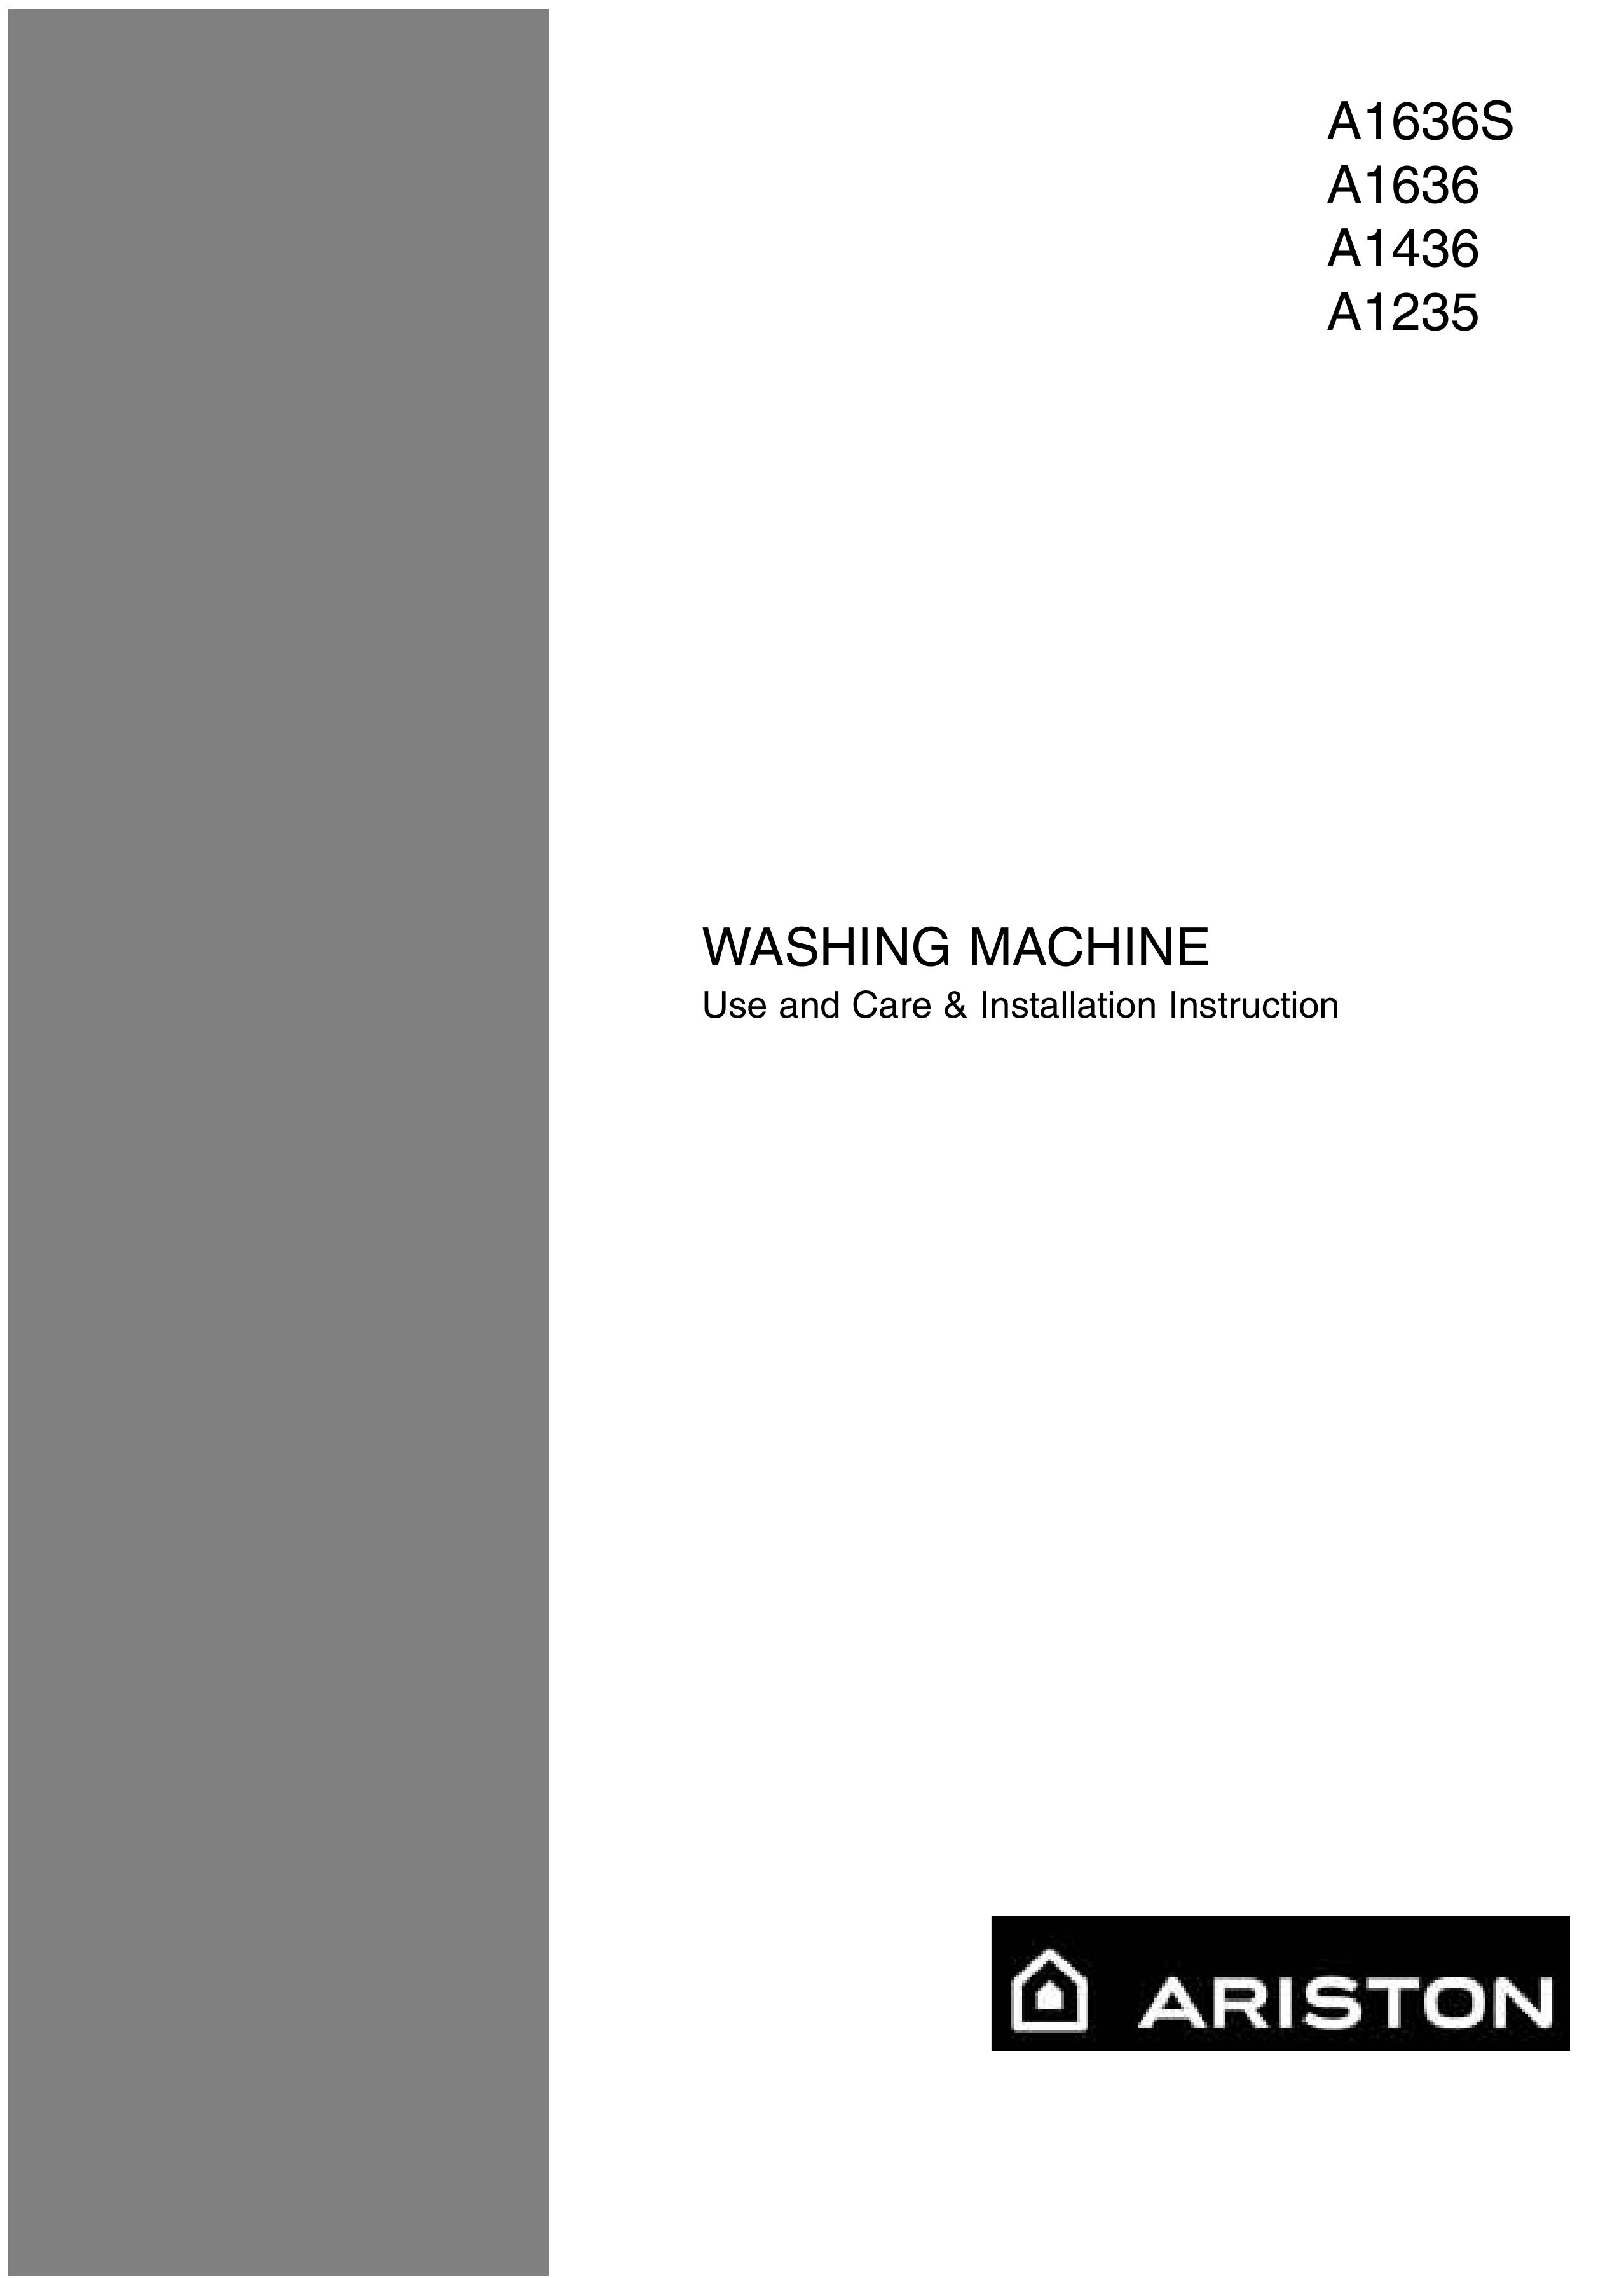 Ariston A1235 Washer User Manual